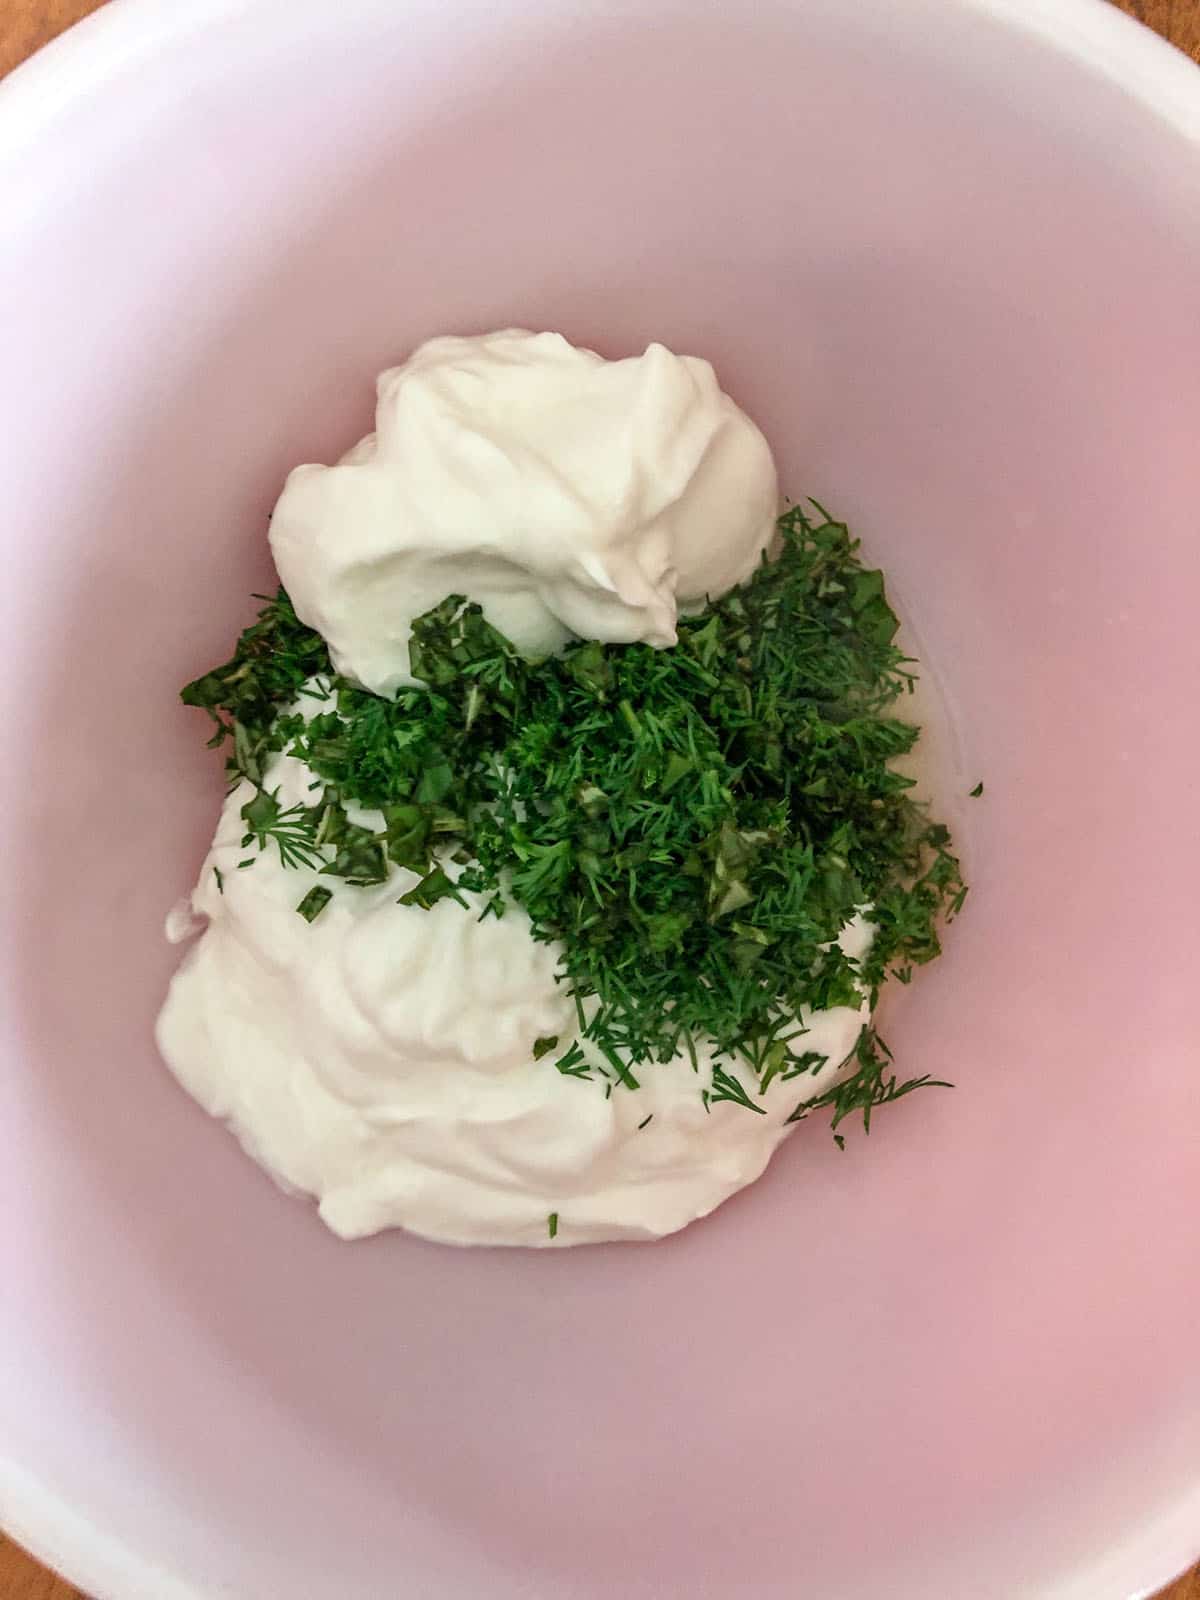 Sour cream, Greek yogurt, lemon juice, and chopped herbs in a mixing bowl.